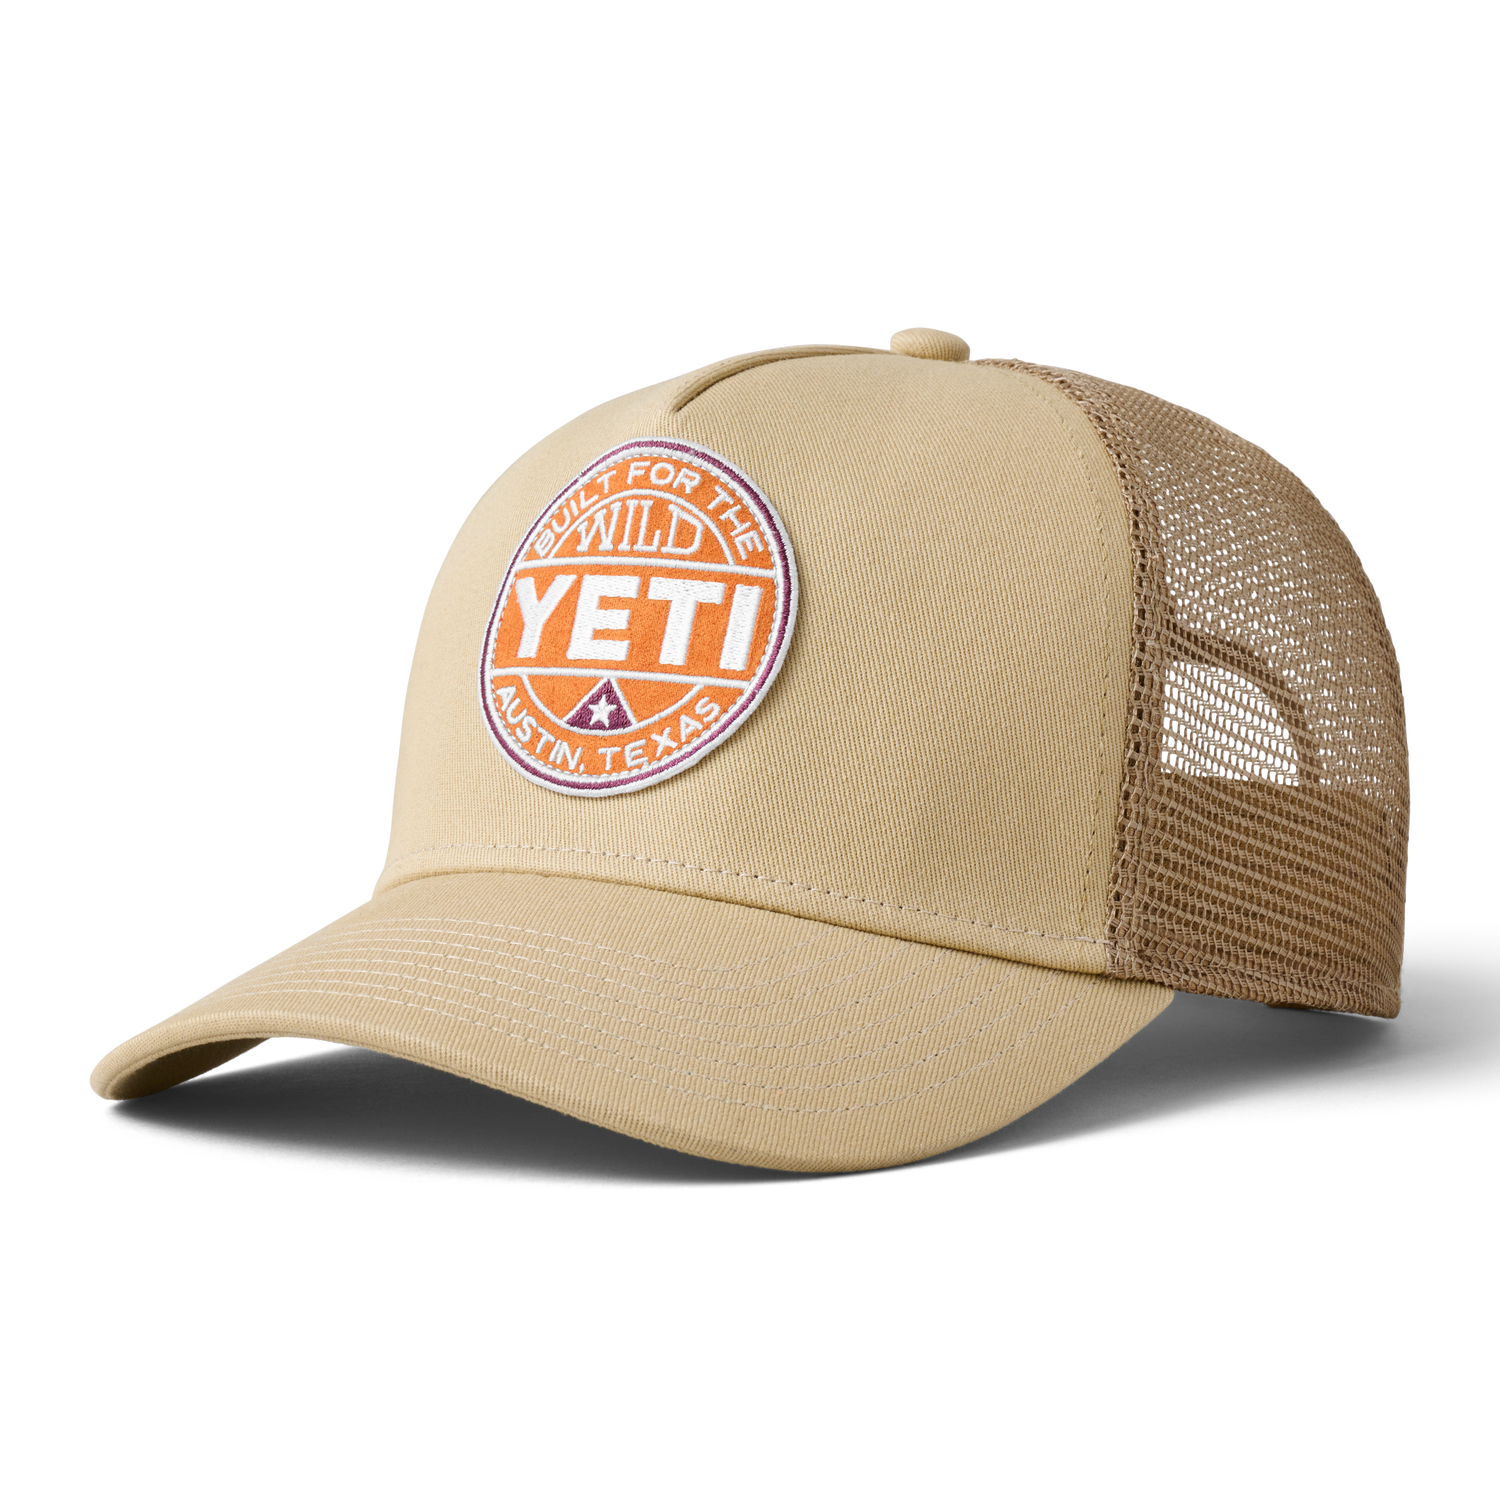 YETI Built for the Wild Trucker-Cap Khaki